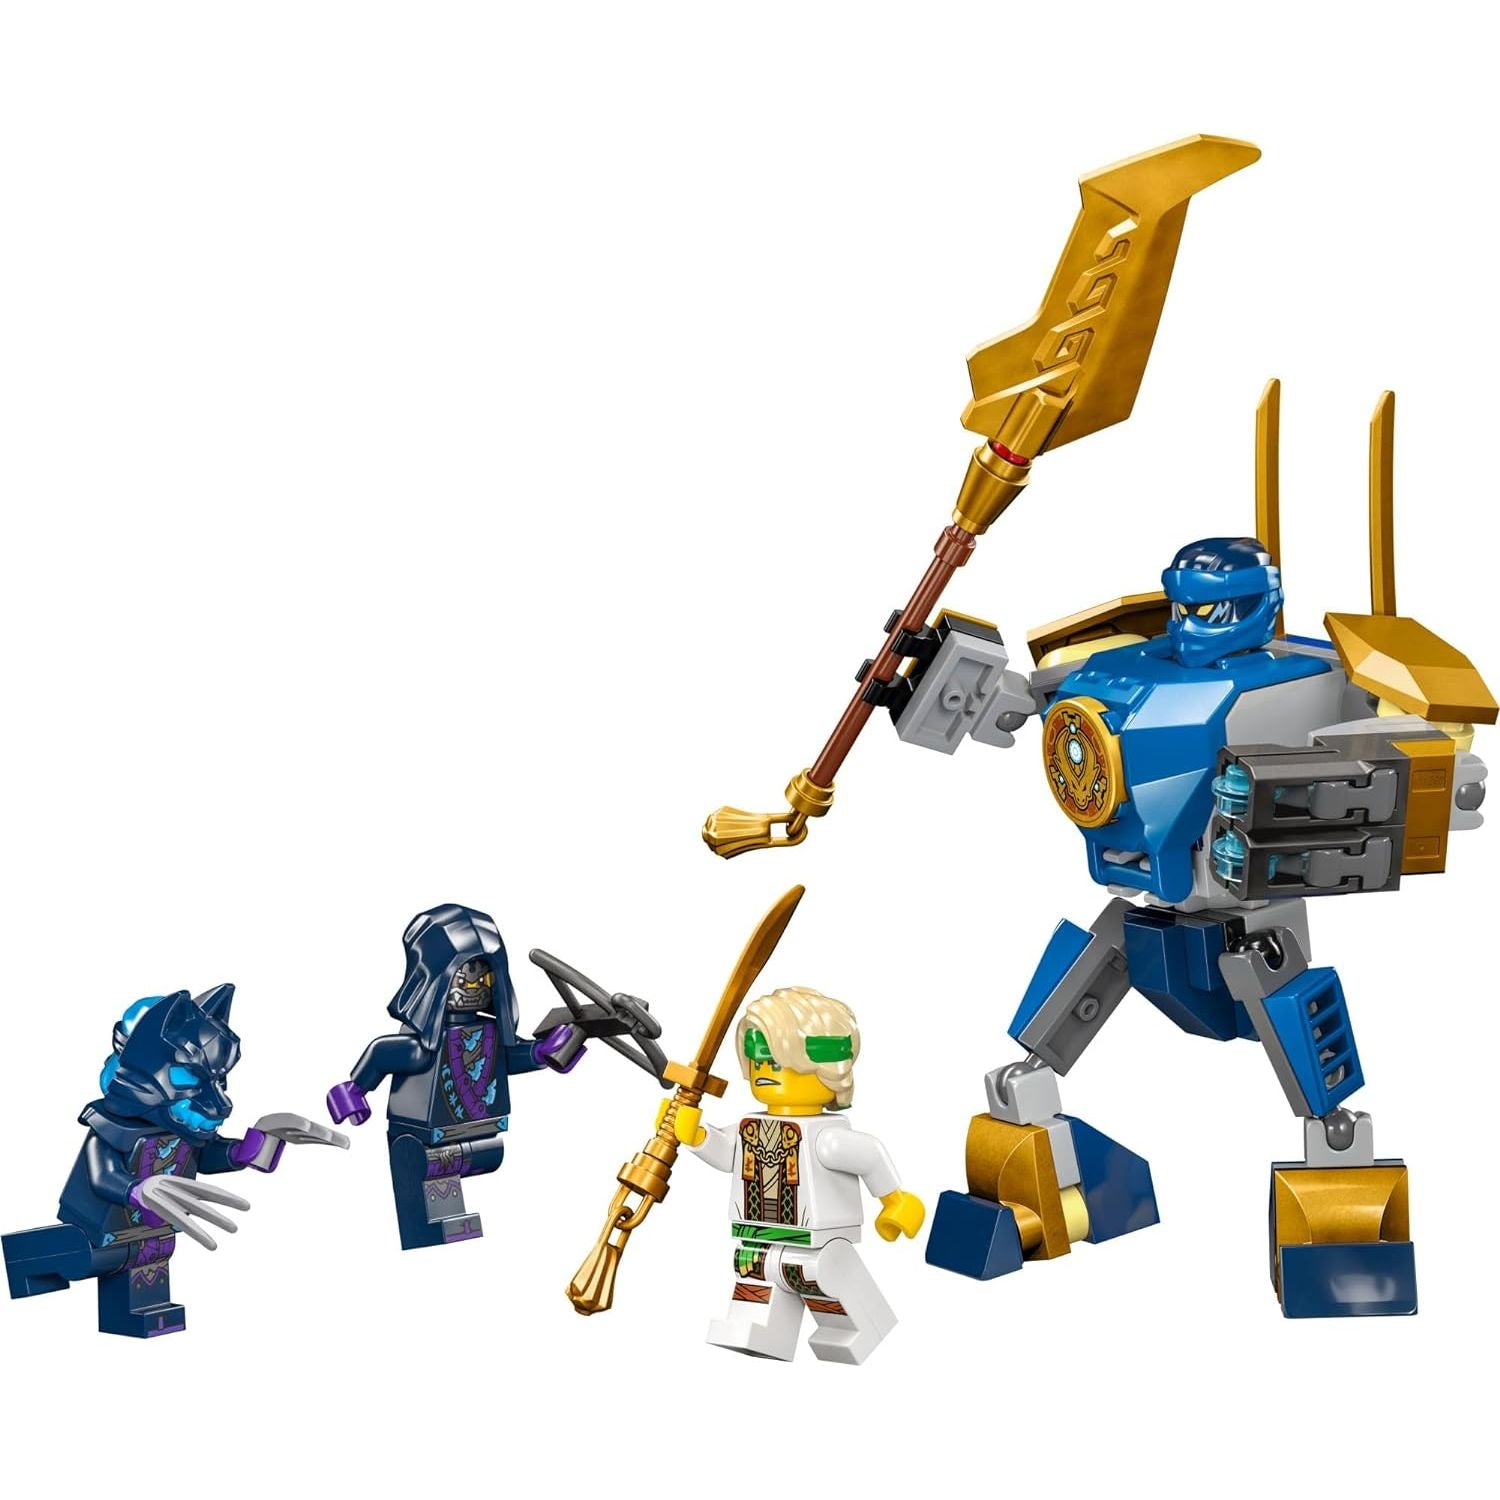 LEGO 71805 NINJAGO Jay’s Mech Battle Pack Adventure Toy Set for Kids, with Jay Minifigure and Mech Figure, Creative Ninja Gift.